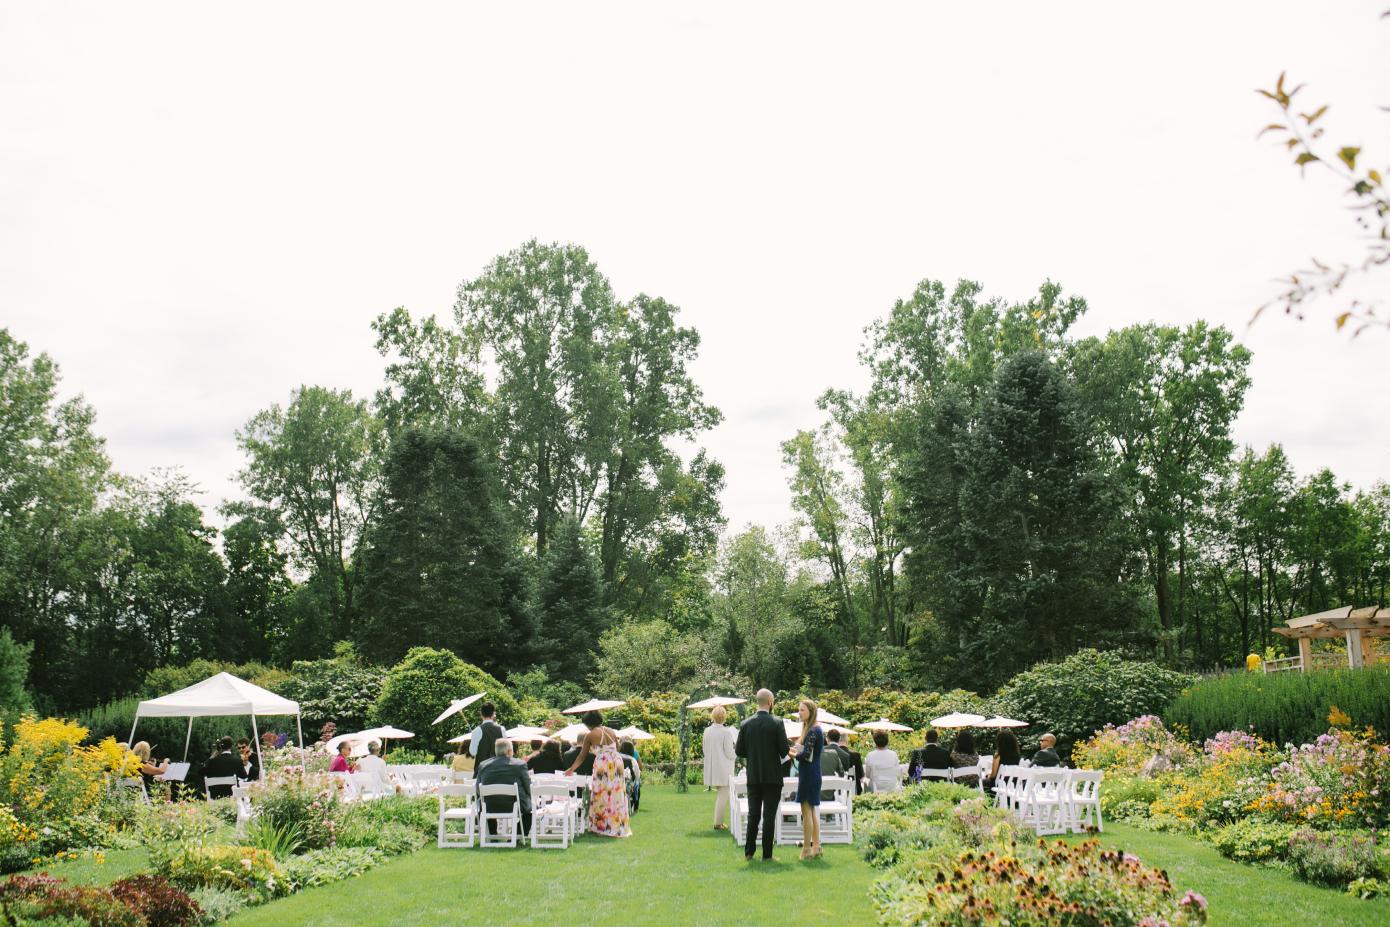 Photo of a wedding arrangement at the botanical garden